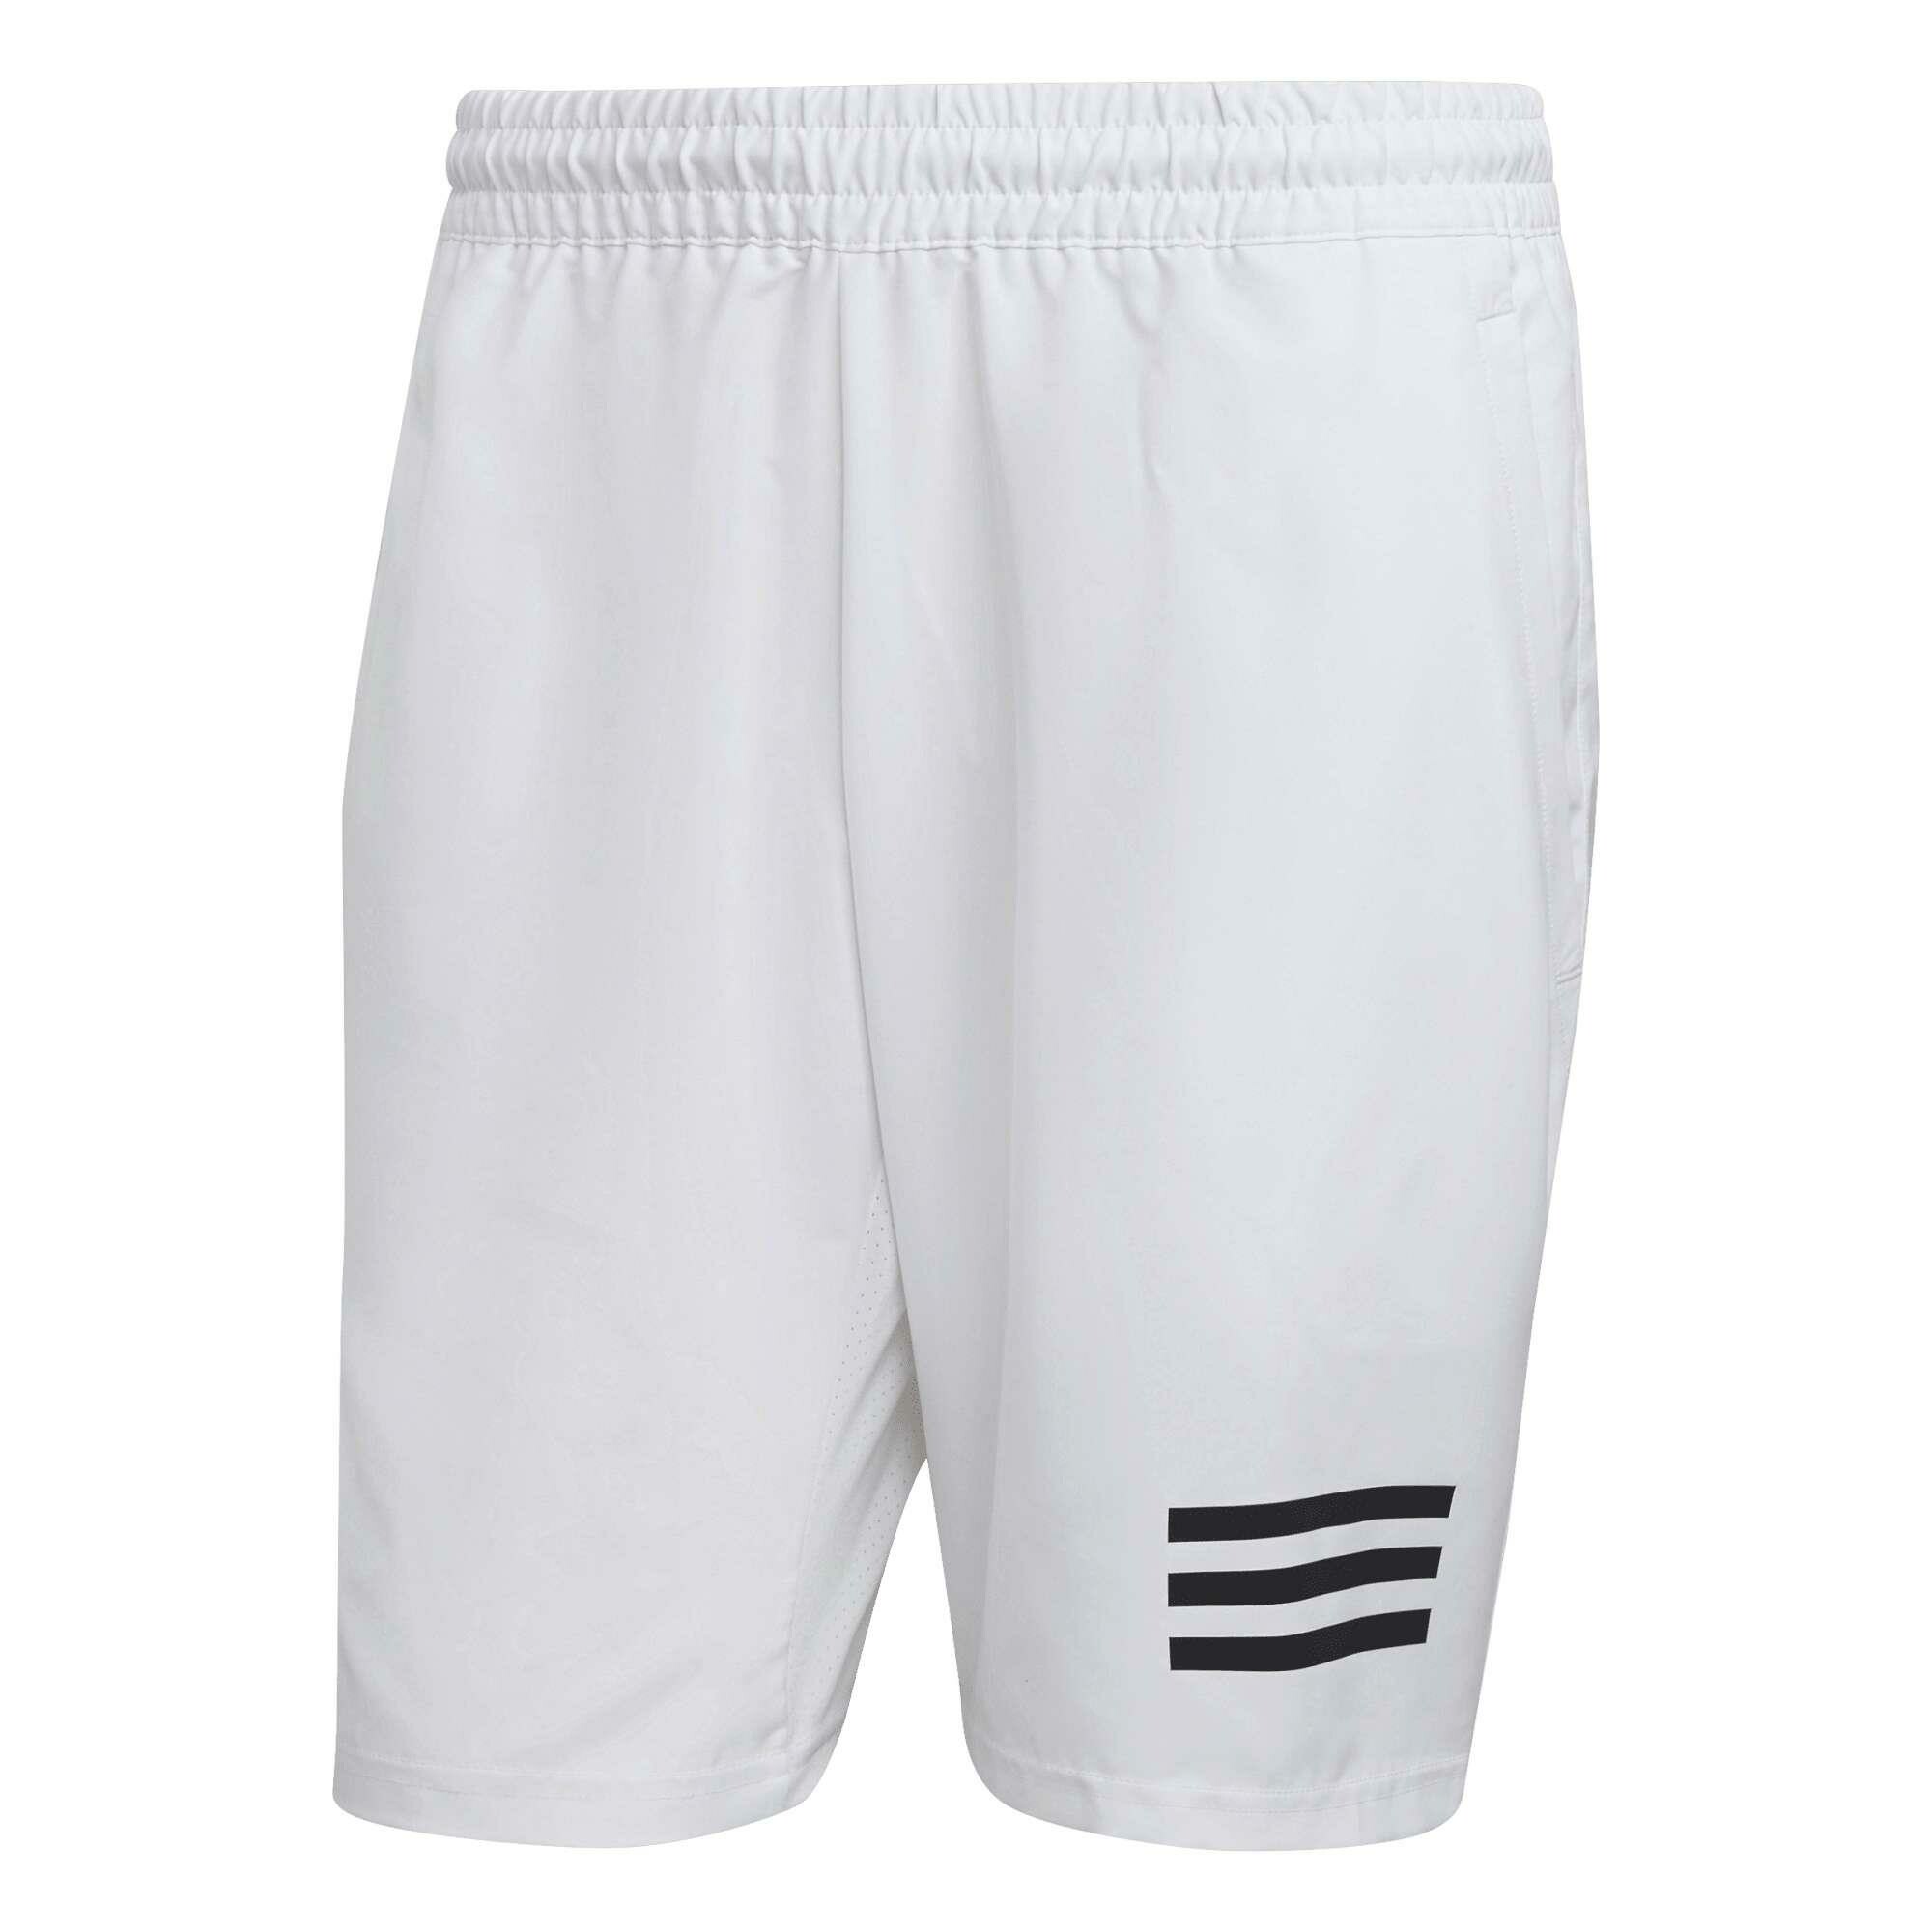 Encommium Panda Wirwar Adidas Club Tennis 3-Stripes tennisshort heren white black